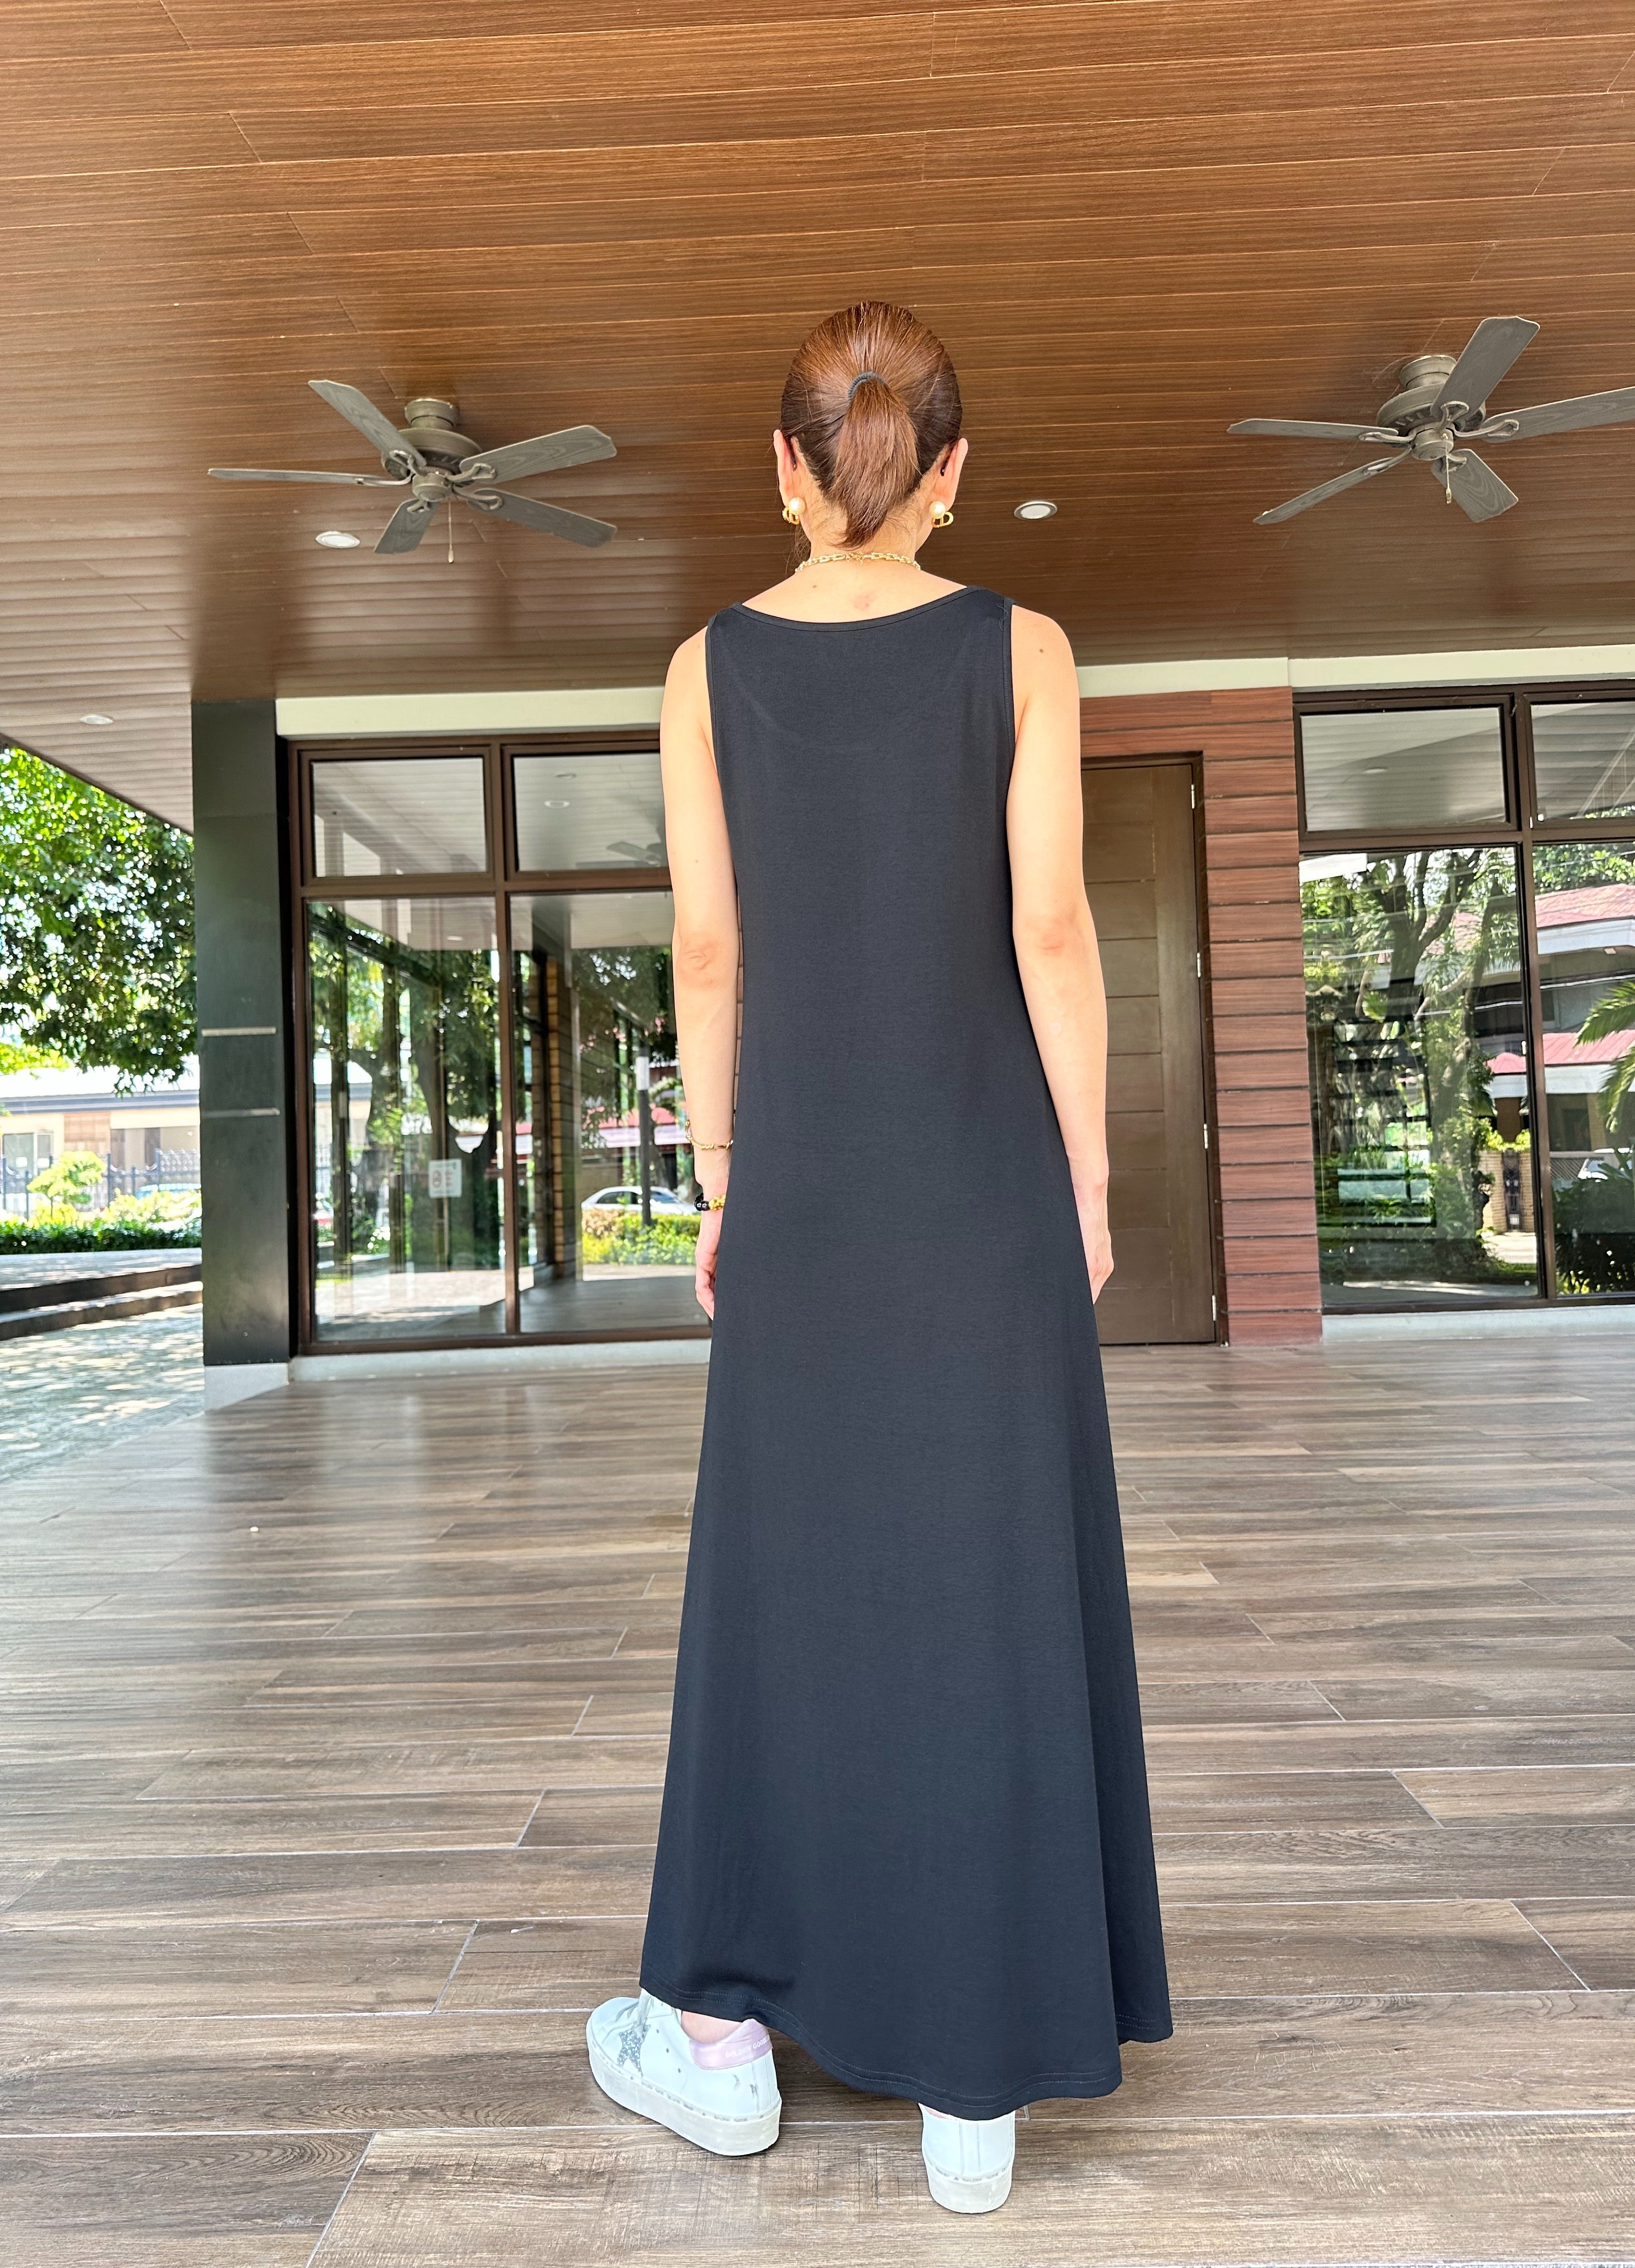 Audrey Sleeveless Dress in Black